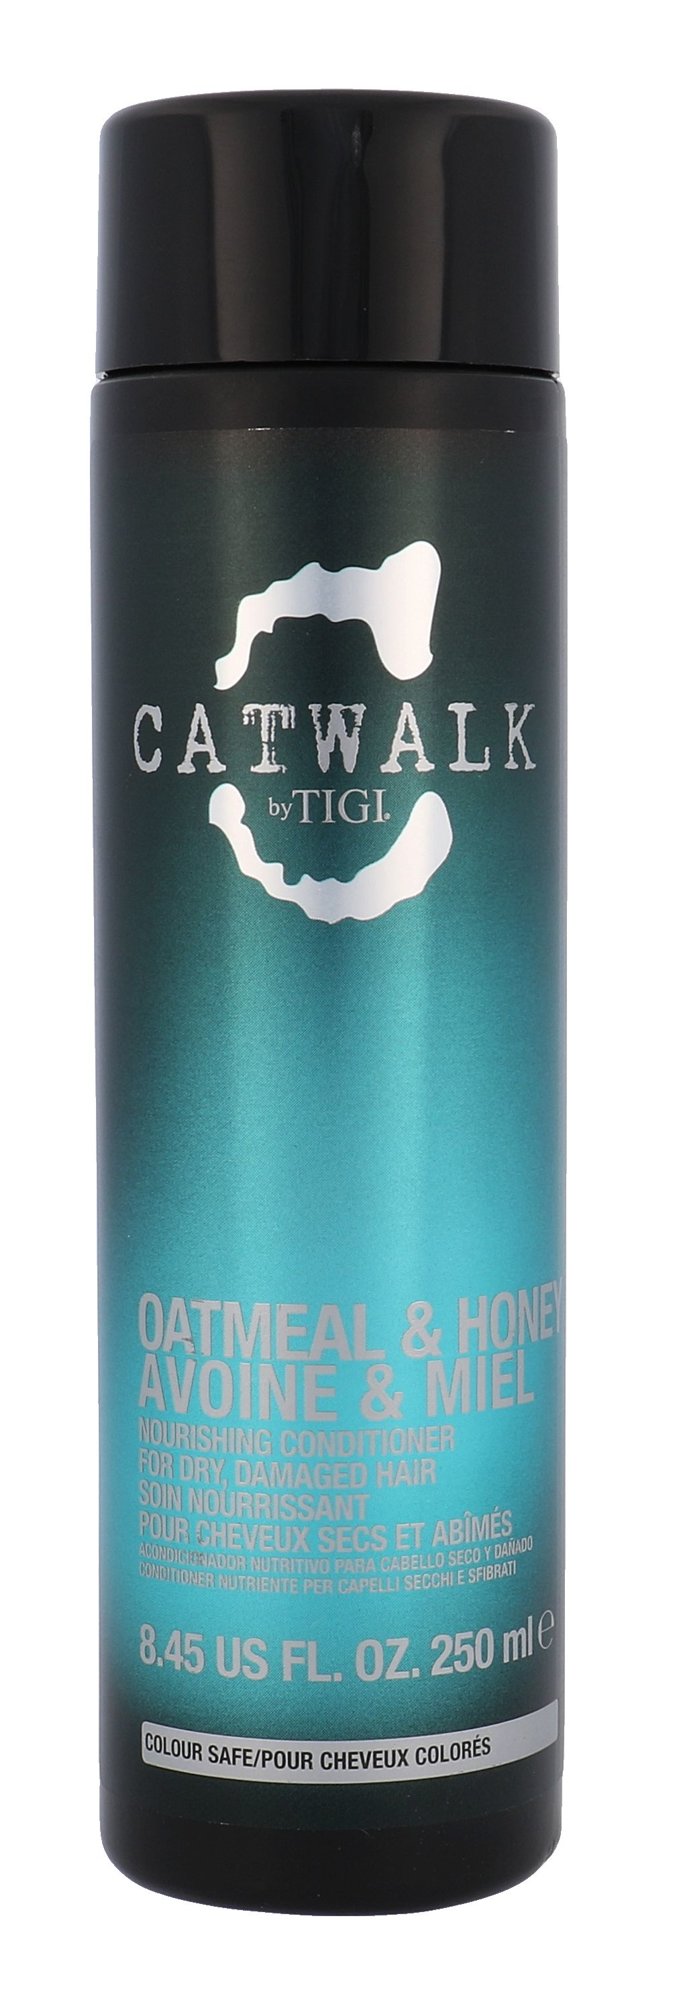 Tigi Catwalk Oatmeal & Honey 250ml kondicionierius